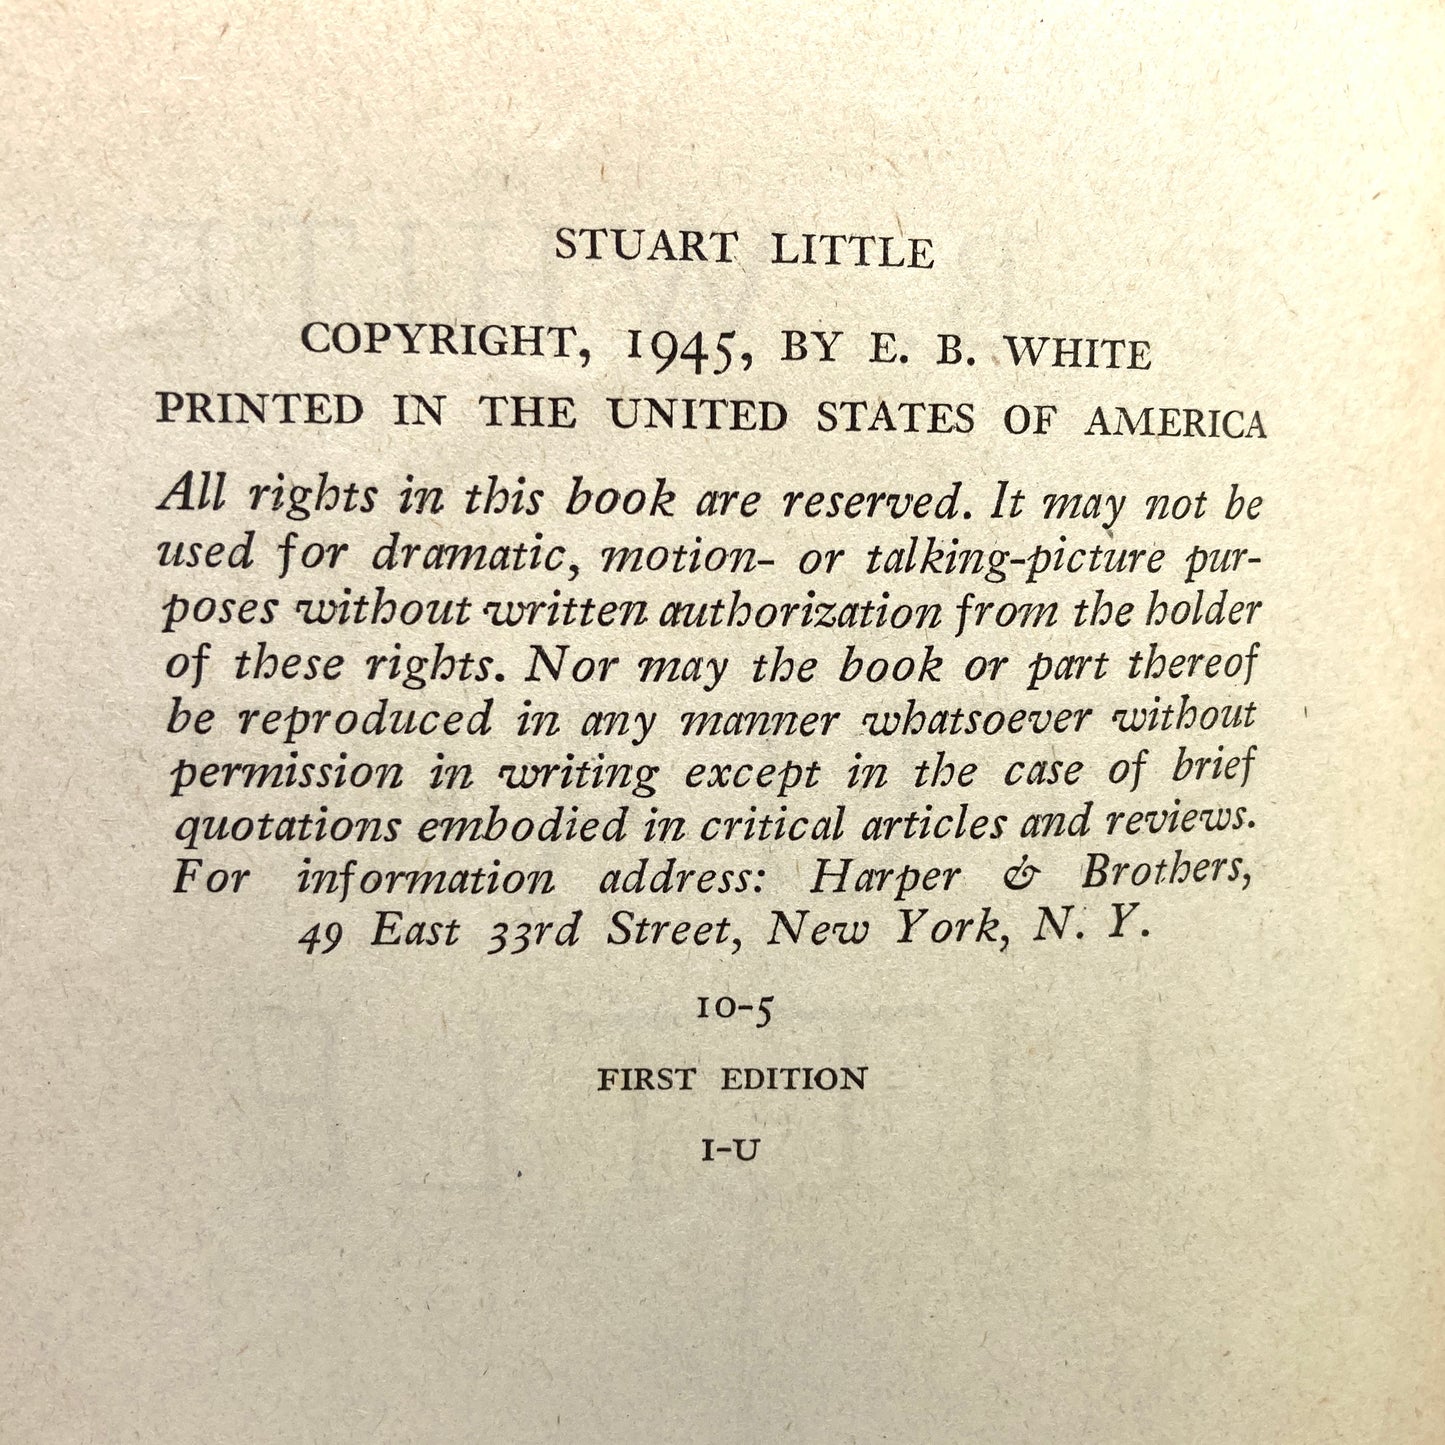 WHITE, E.B. "Stuart Little" [Harper & Brothers, 1945] 1st Edition